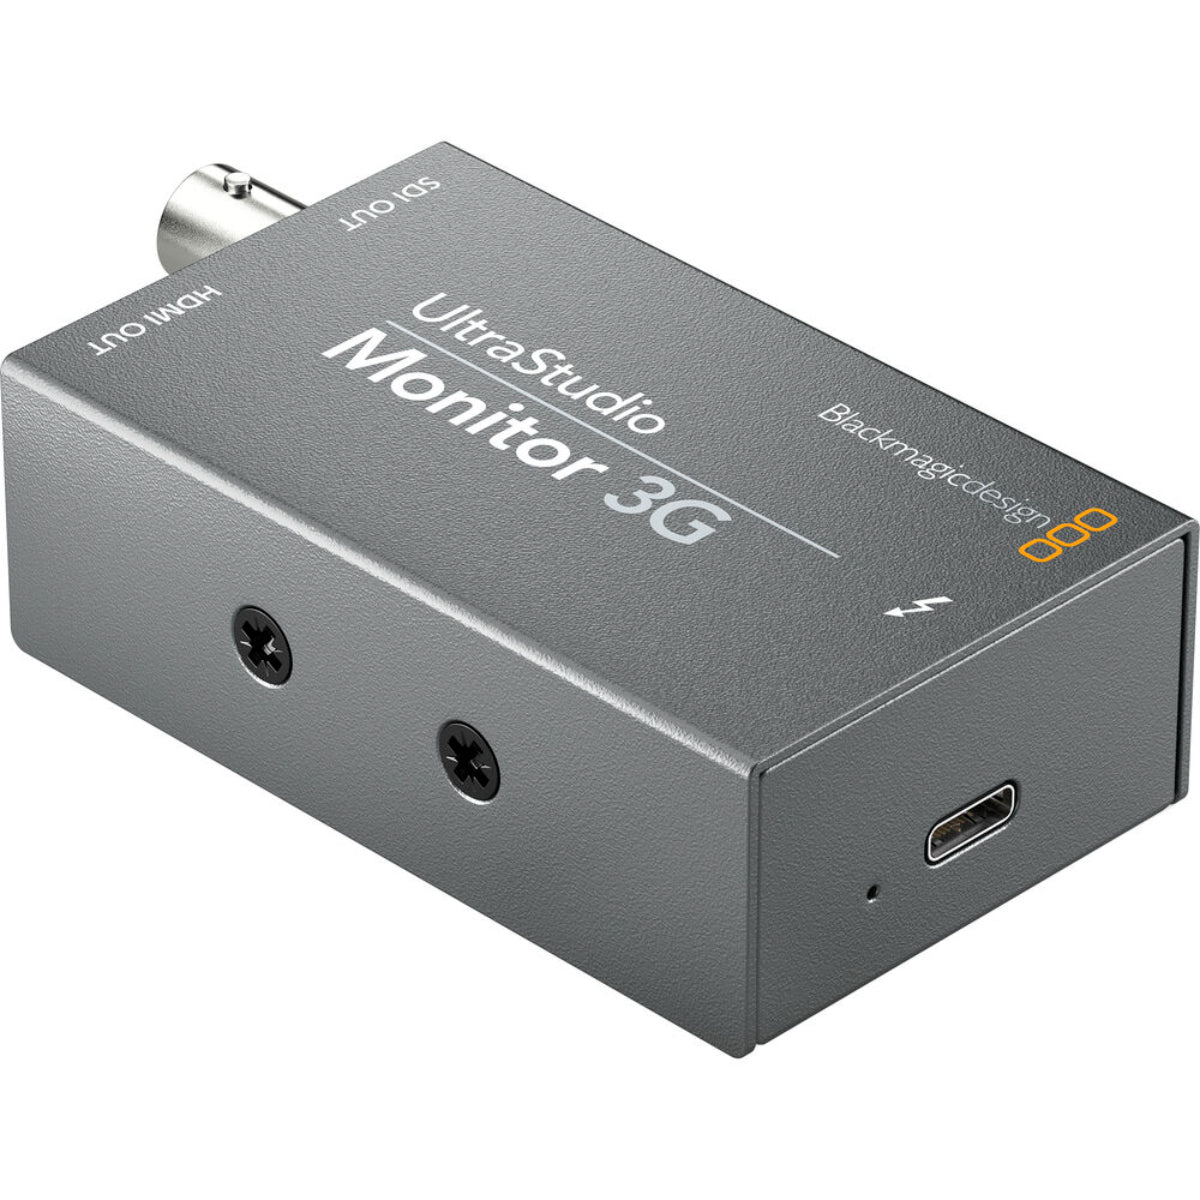 Blackmagic Design UltraStudio Monitor 3G (Thunderbolt 3 USB-C cable not included)